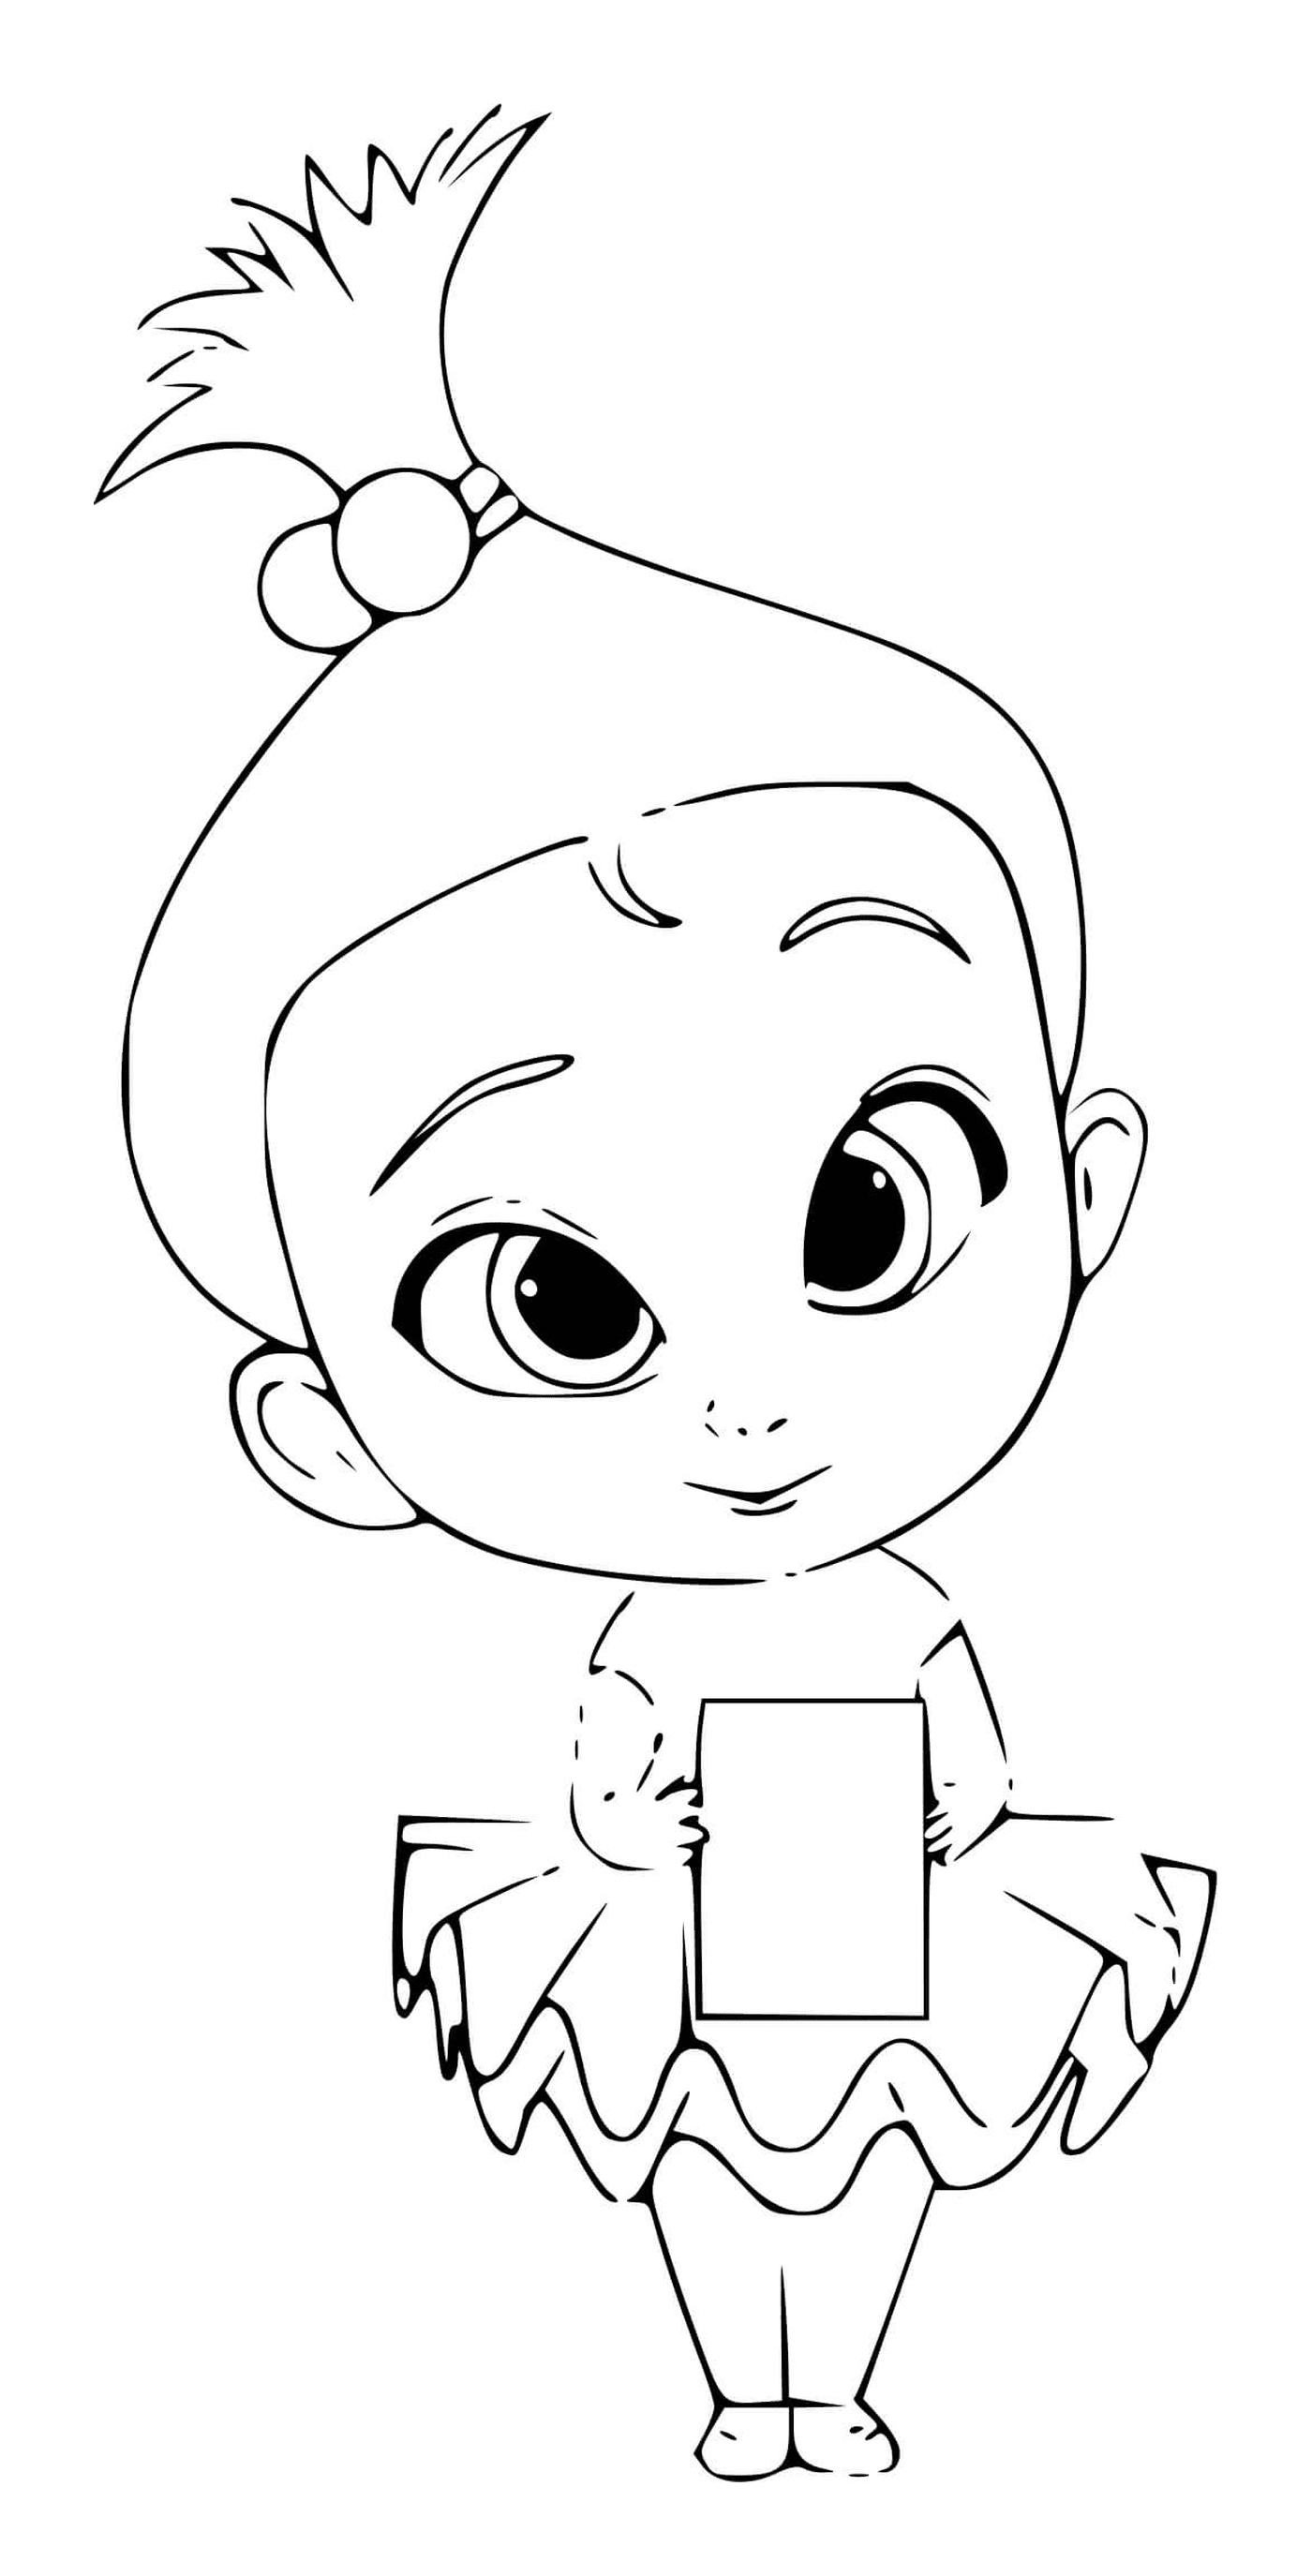   Un garçon tenant un livre 